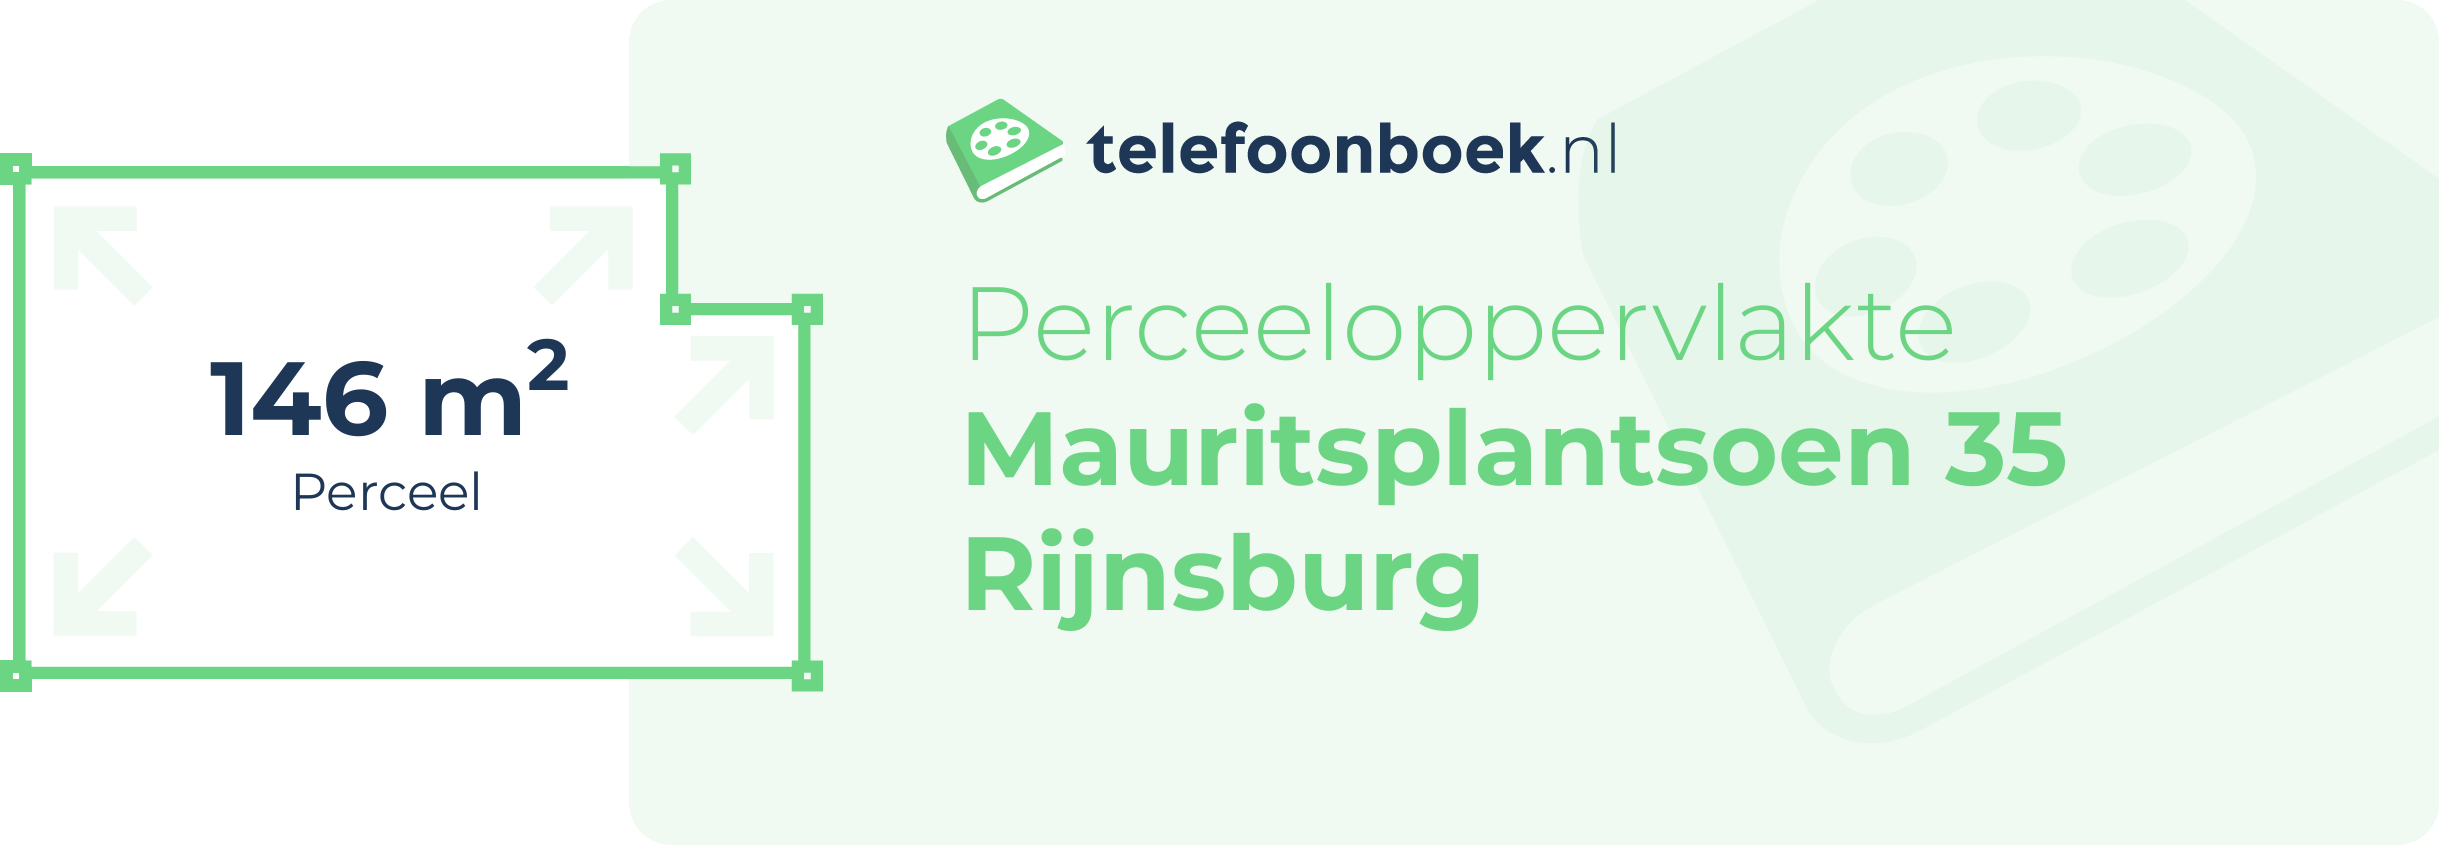 Perceeloppervlakte Mauritsplantsoen 35 Rijnsburg